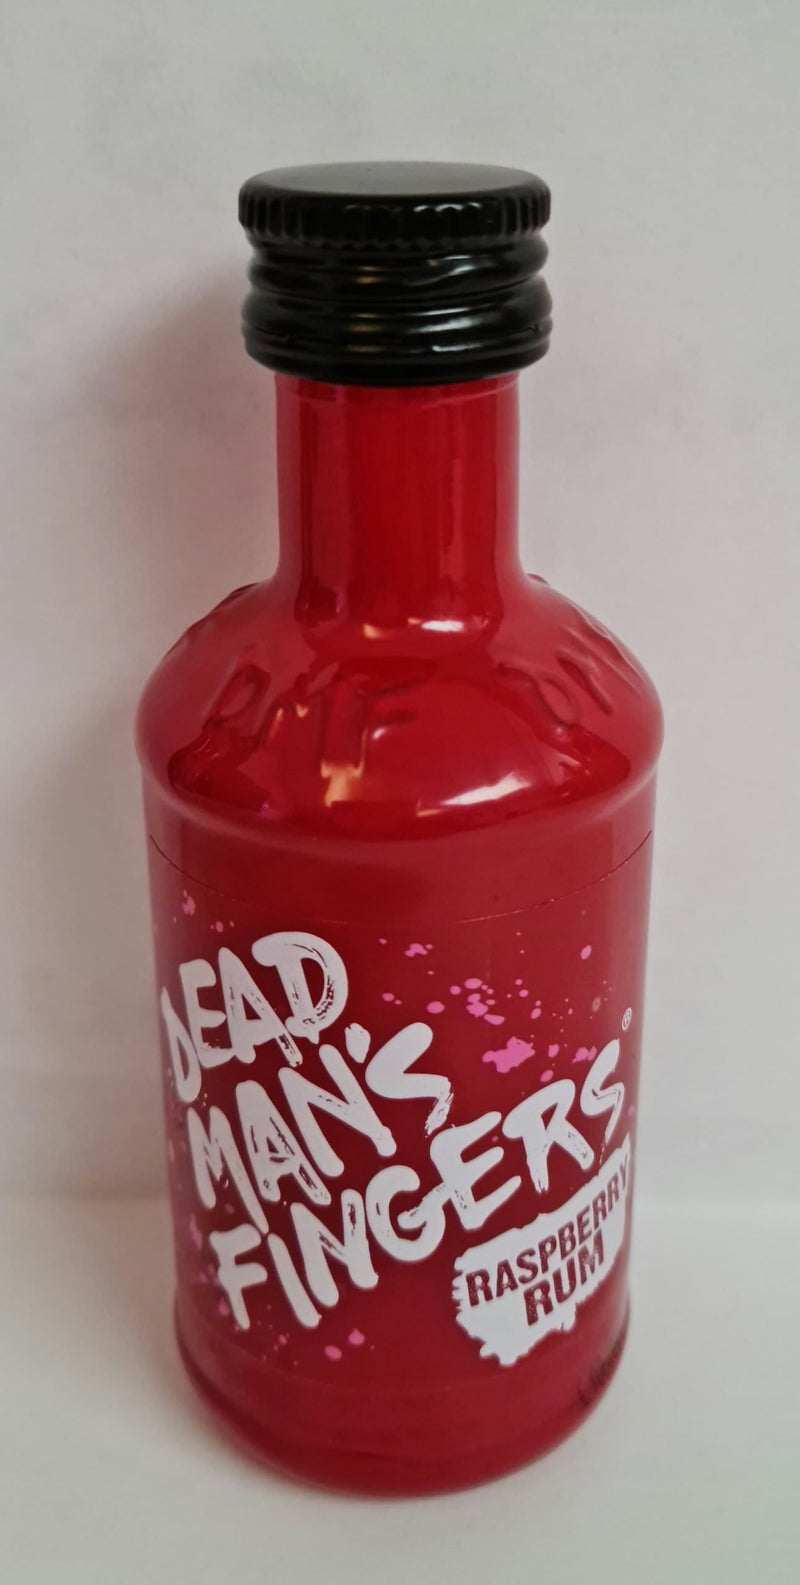 Dead Man's Fingers Raspberry Rum 5cl